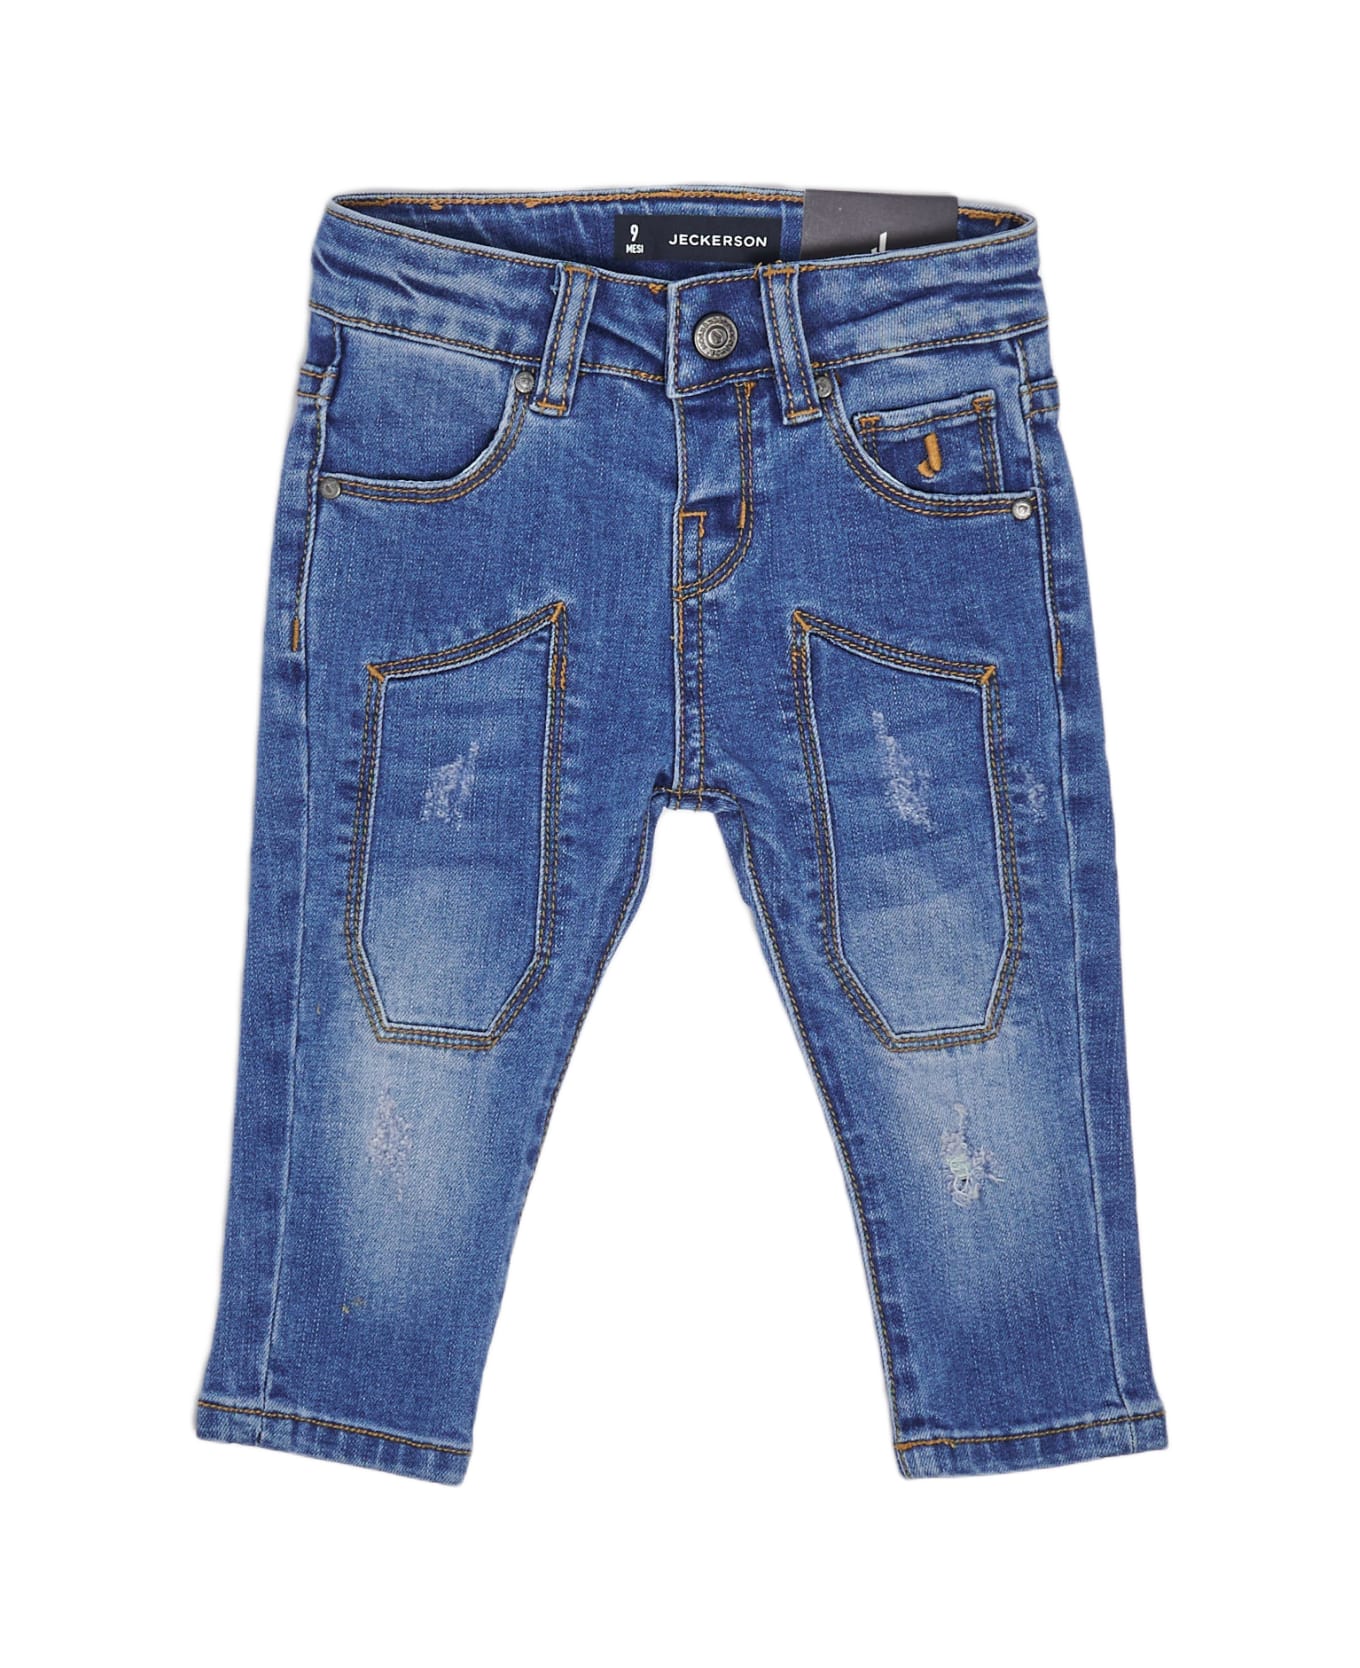 Jeckerson Jeans Jeans - DENIM ボトムス